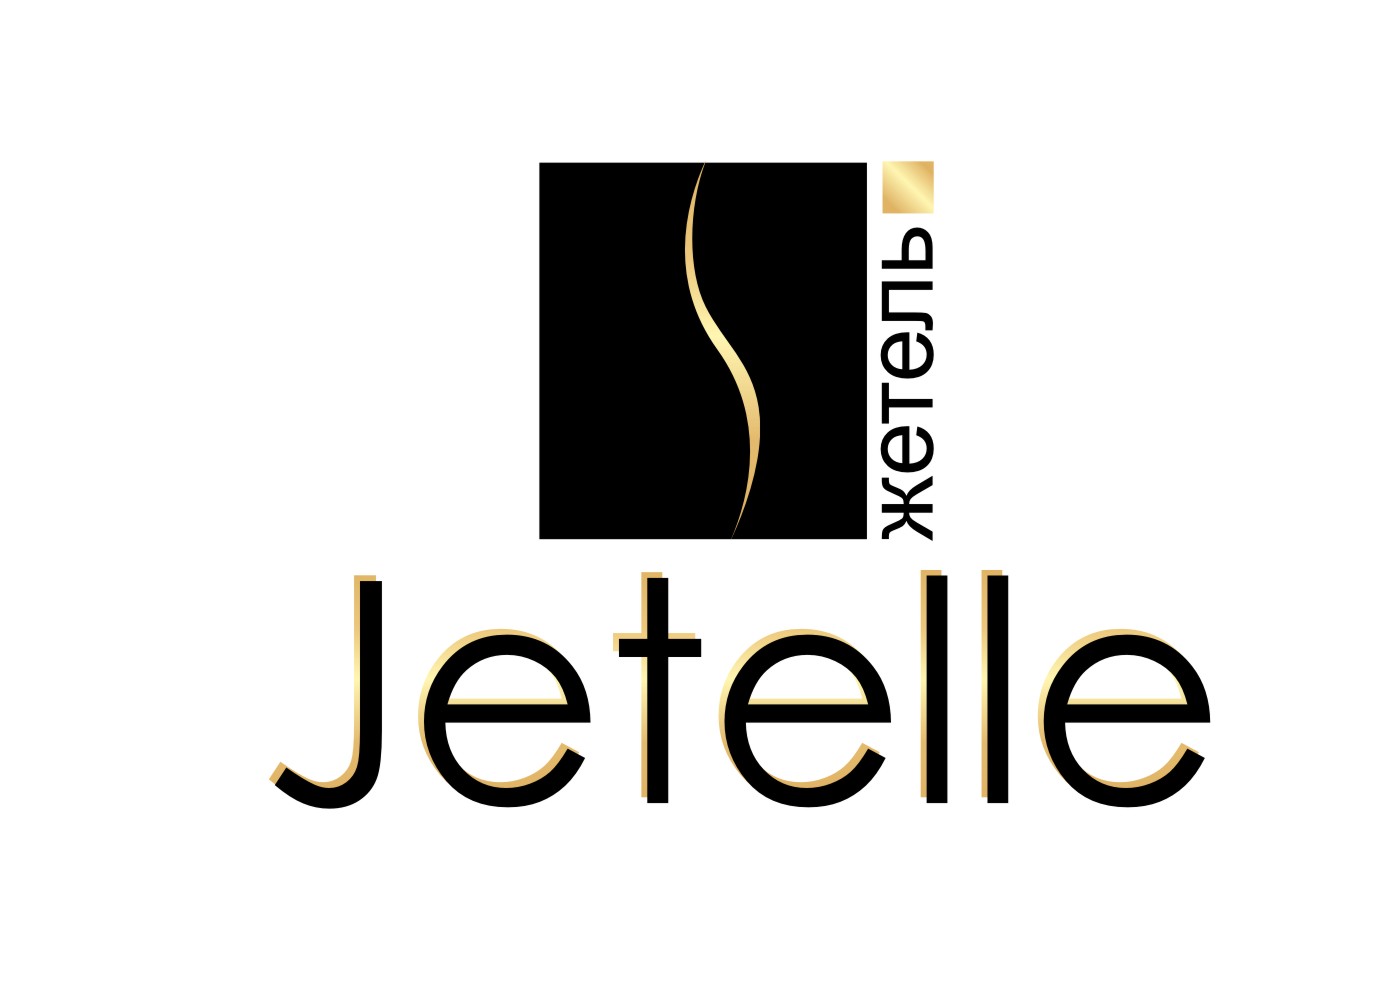 Логотип Jetelle - женское белье